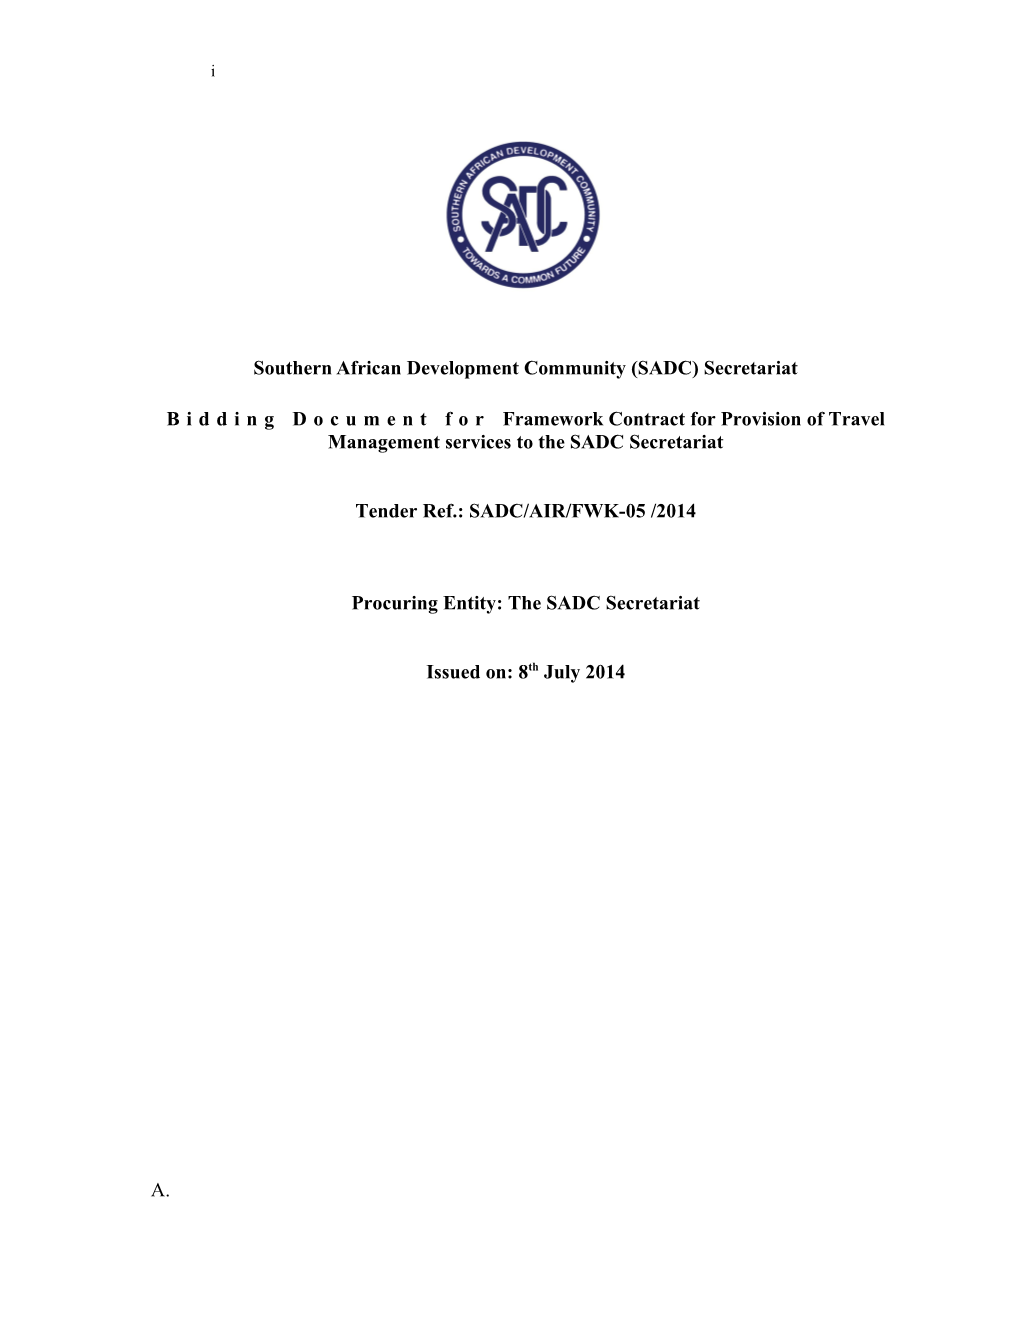 Standard Bidding Documents for Procurement of General Services